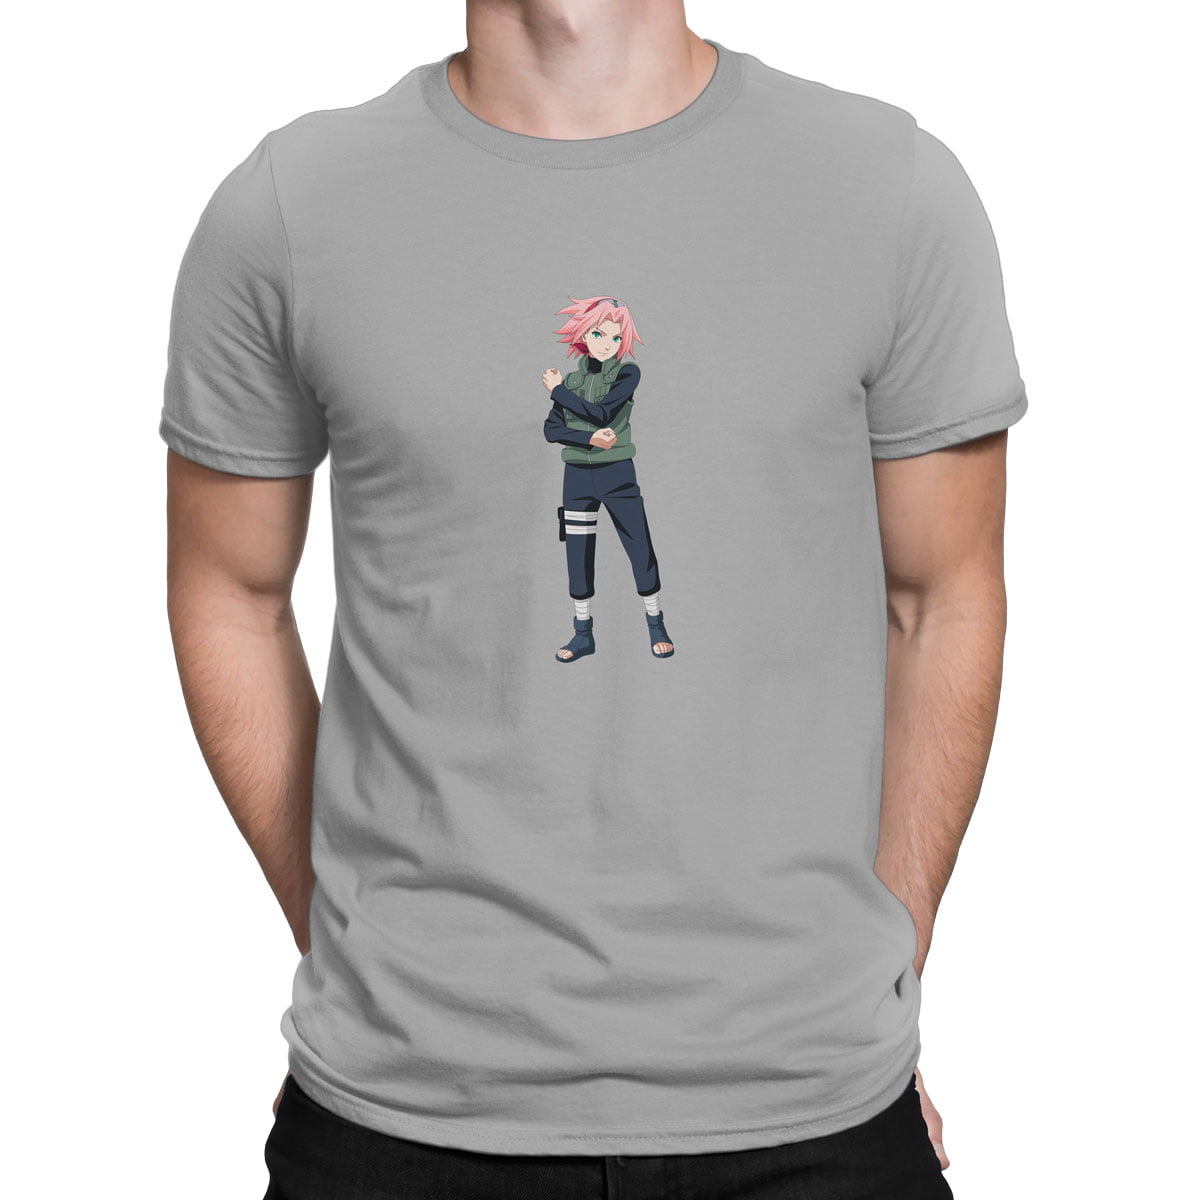 Naruto uzumaki sakura haruno tisort erkek g. - naruto - sakura haruno baskılı erkek t-shirt - figurex